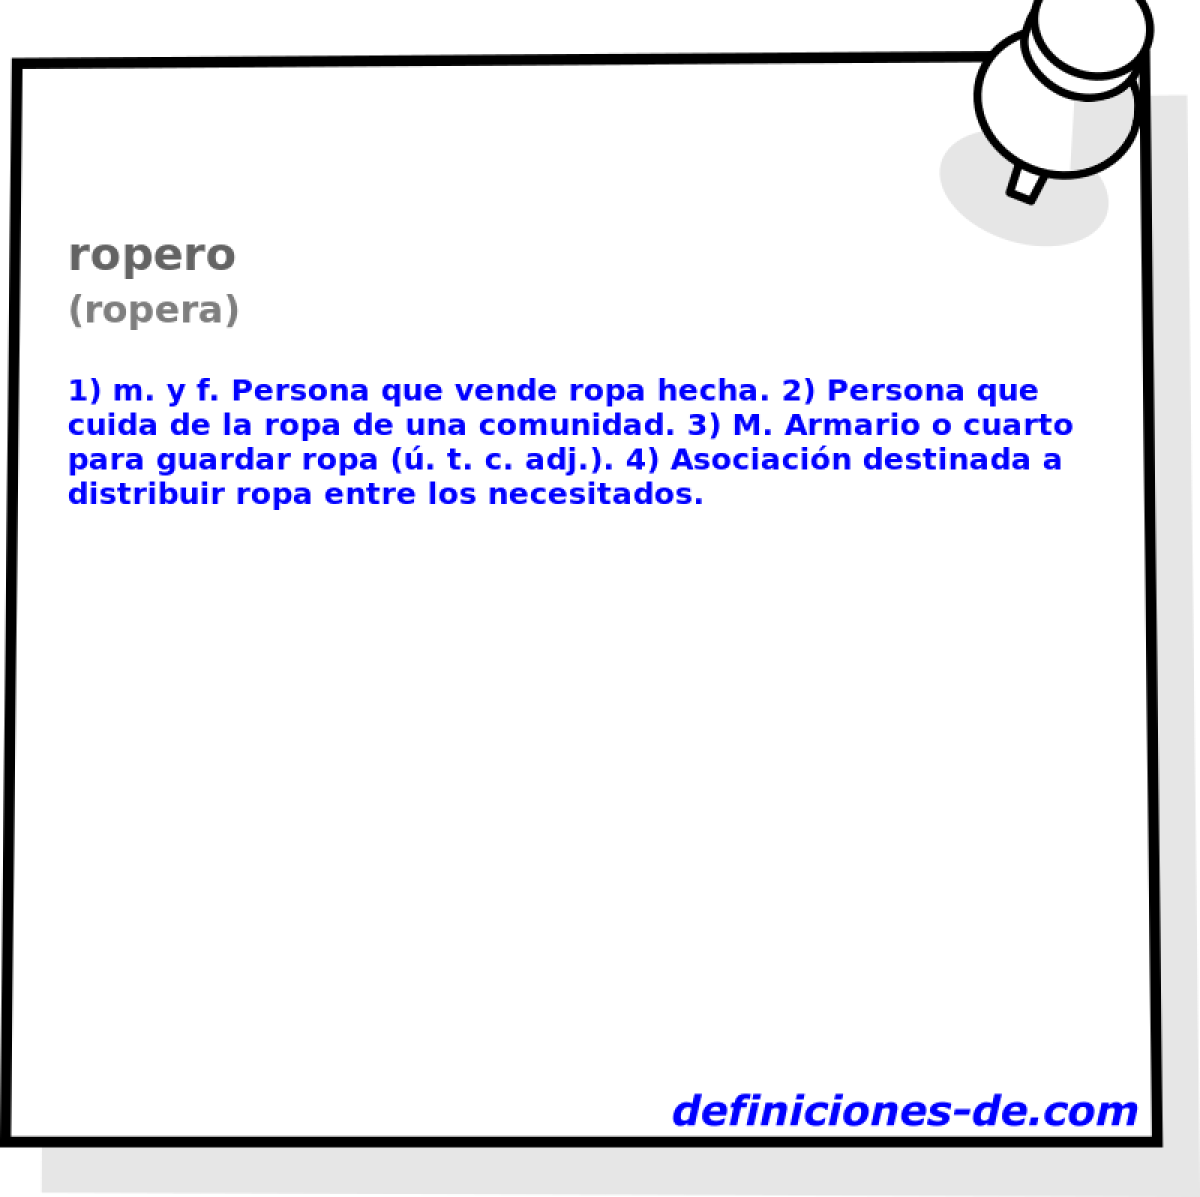 ropero (ropera)